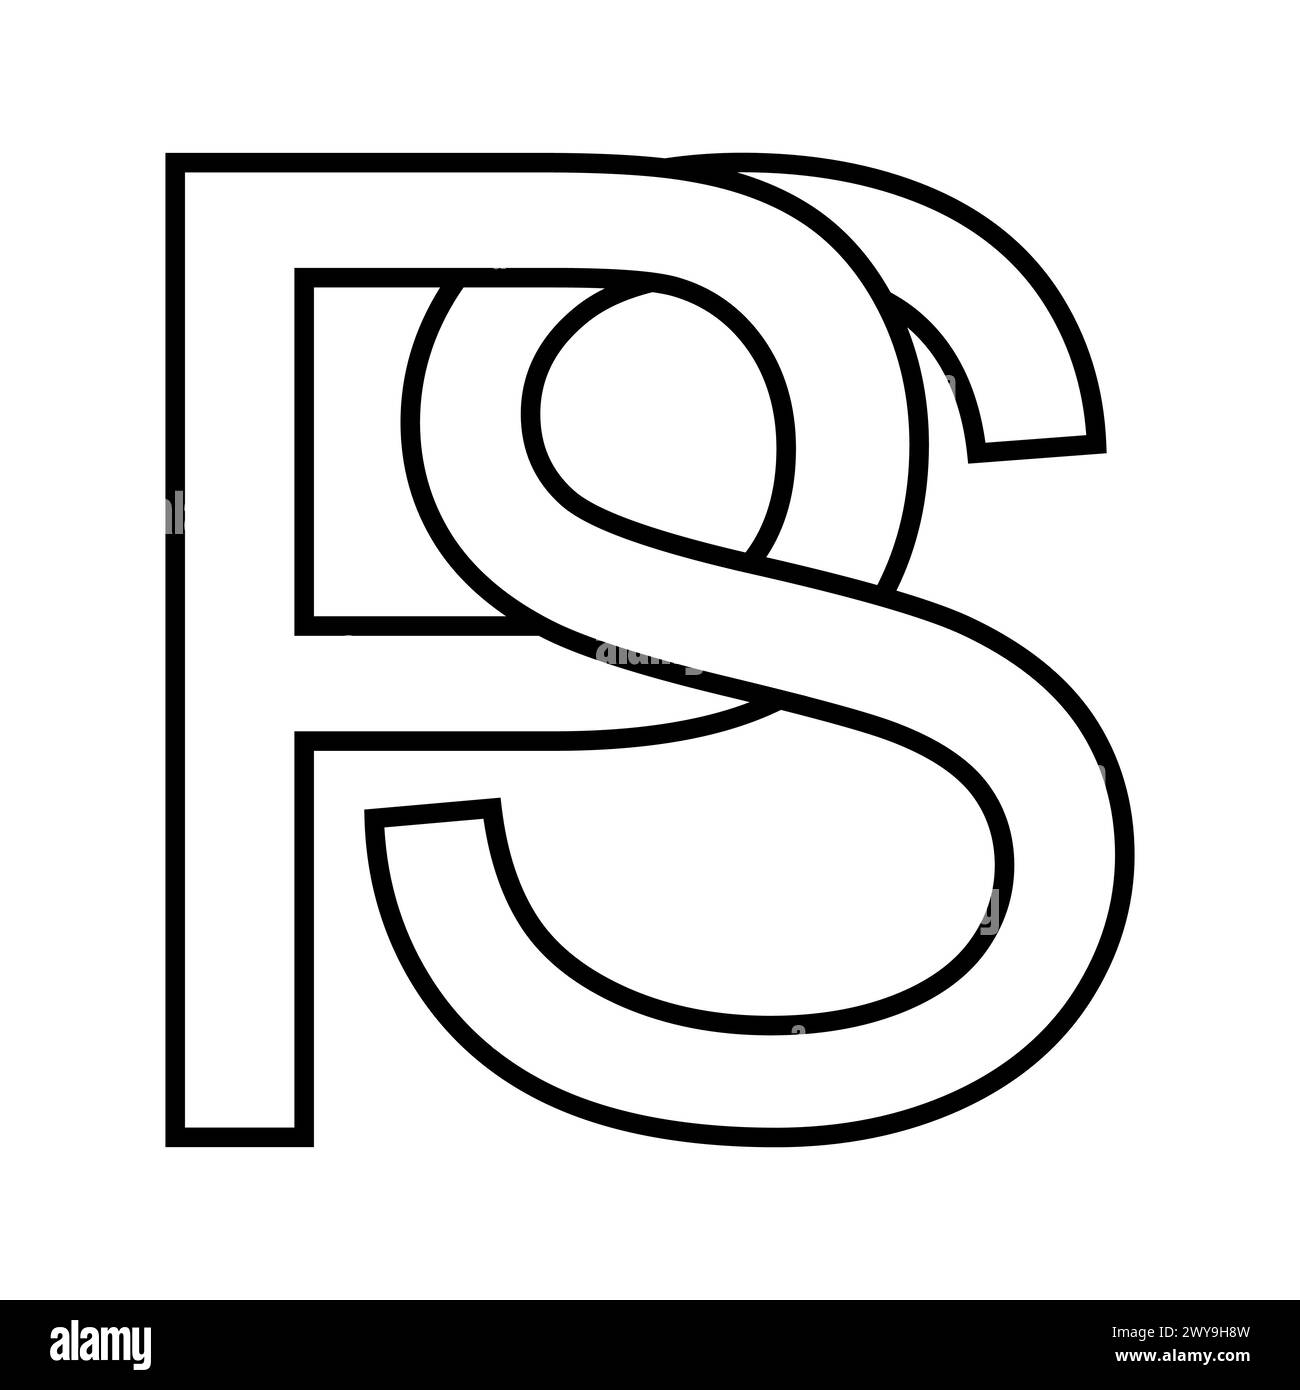 Logozeichen ps sp Symbol Doppelbuchstaben Logotype p s Stock Vektor